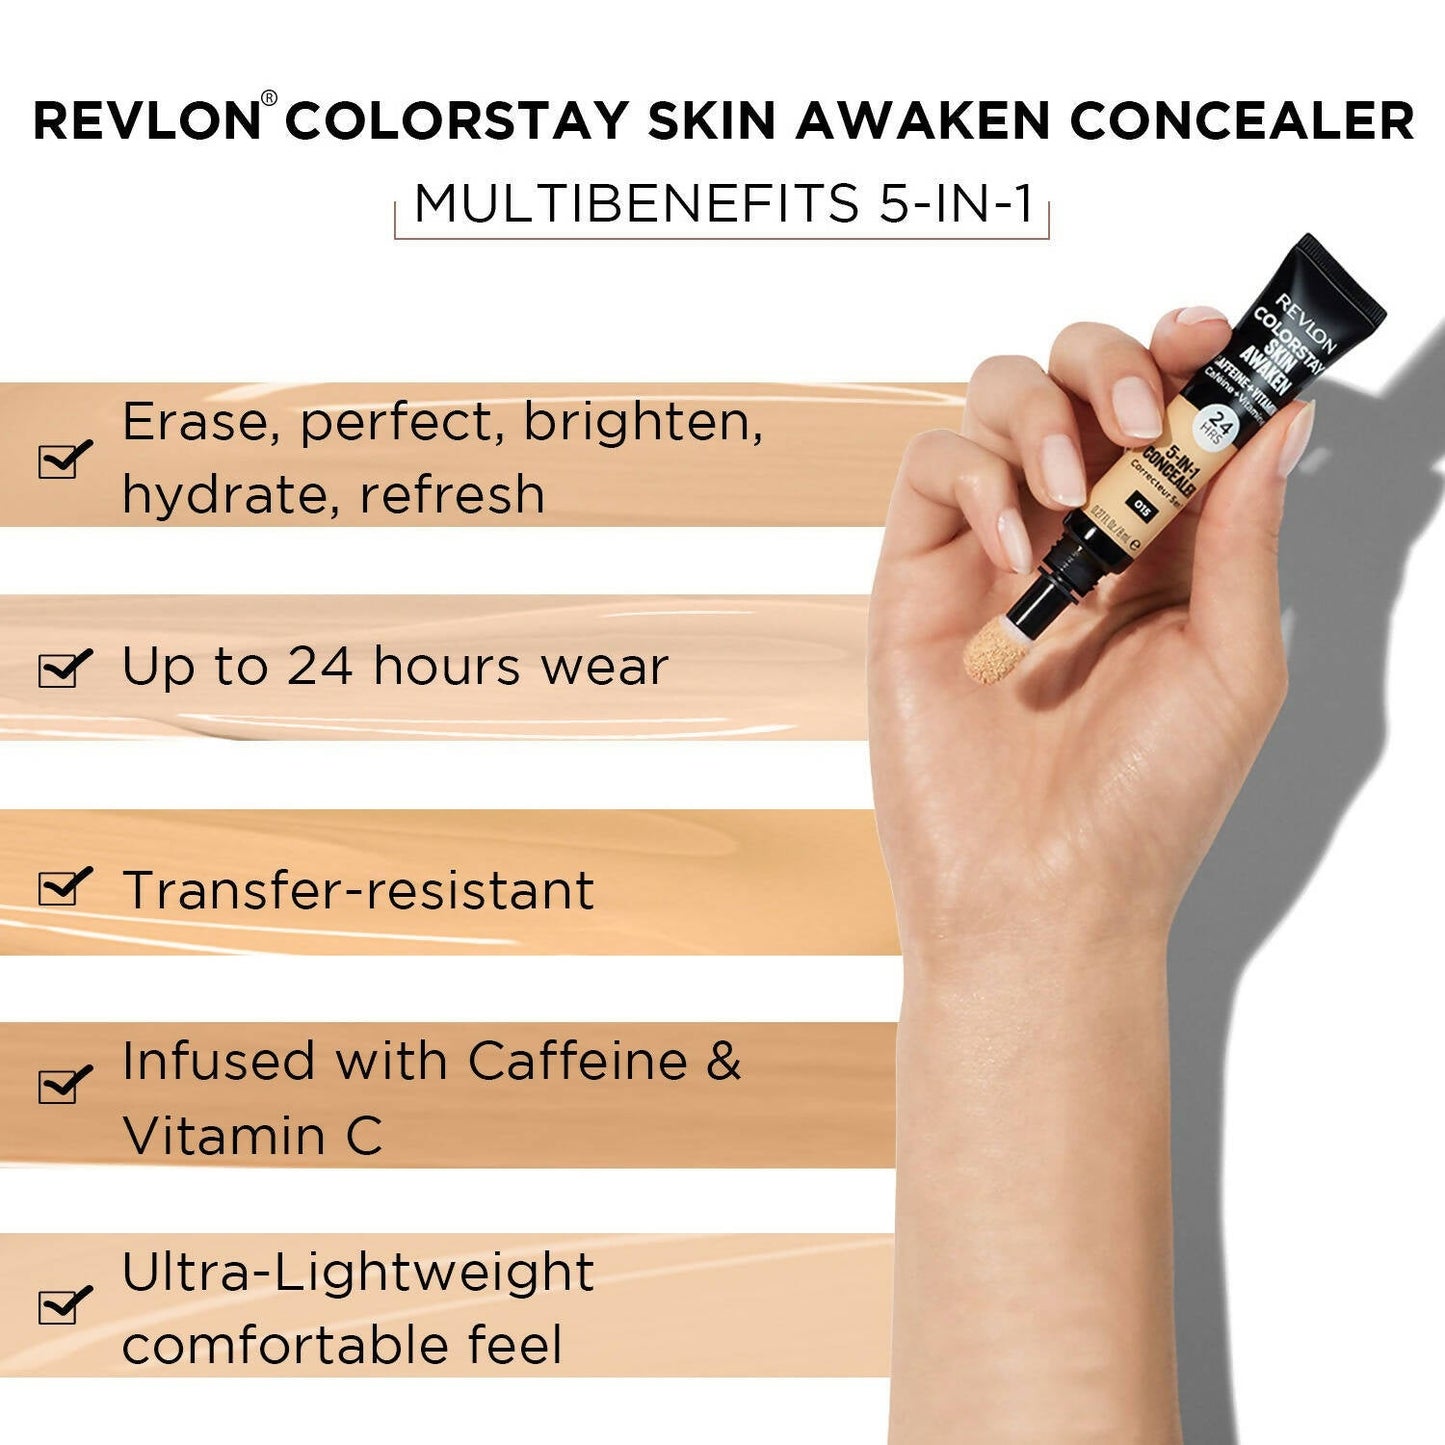 Revlon Colorstay Skin Awaken 5-in-1 Concealer - Light Medium